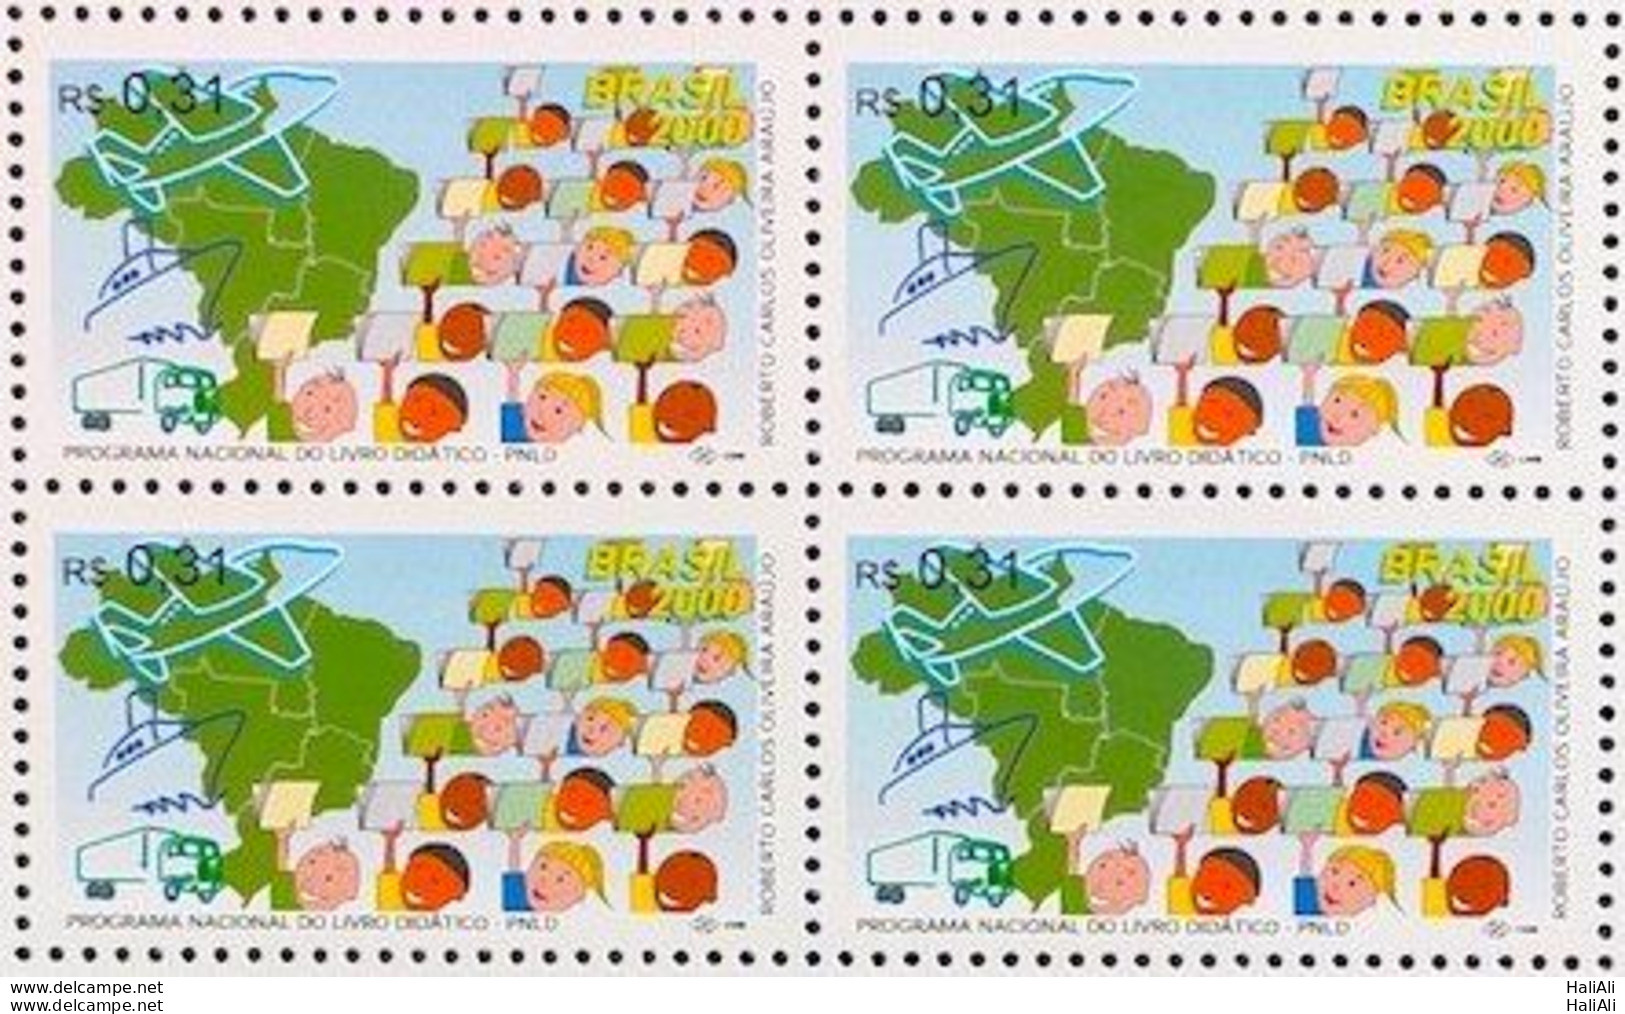 C 2242 Brazil Stamp National Textbook Program 2000 Block Of 4 - Unused Stamps